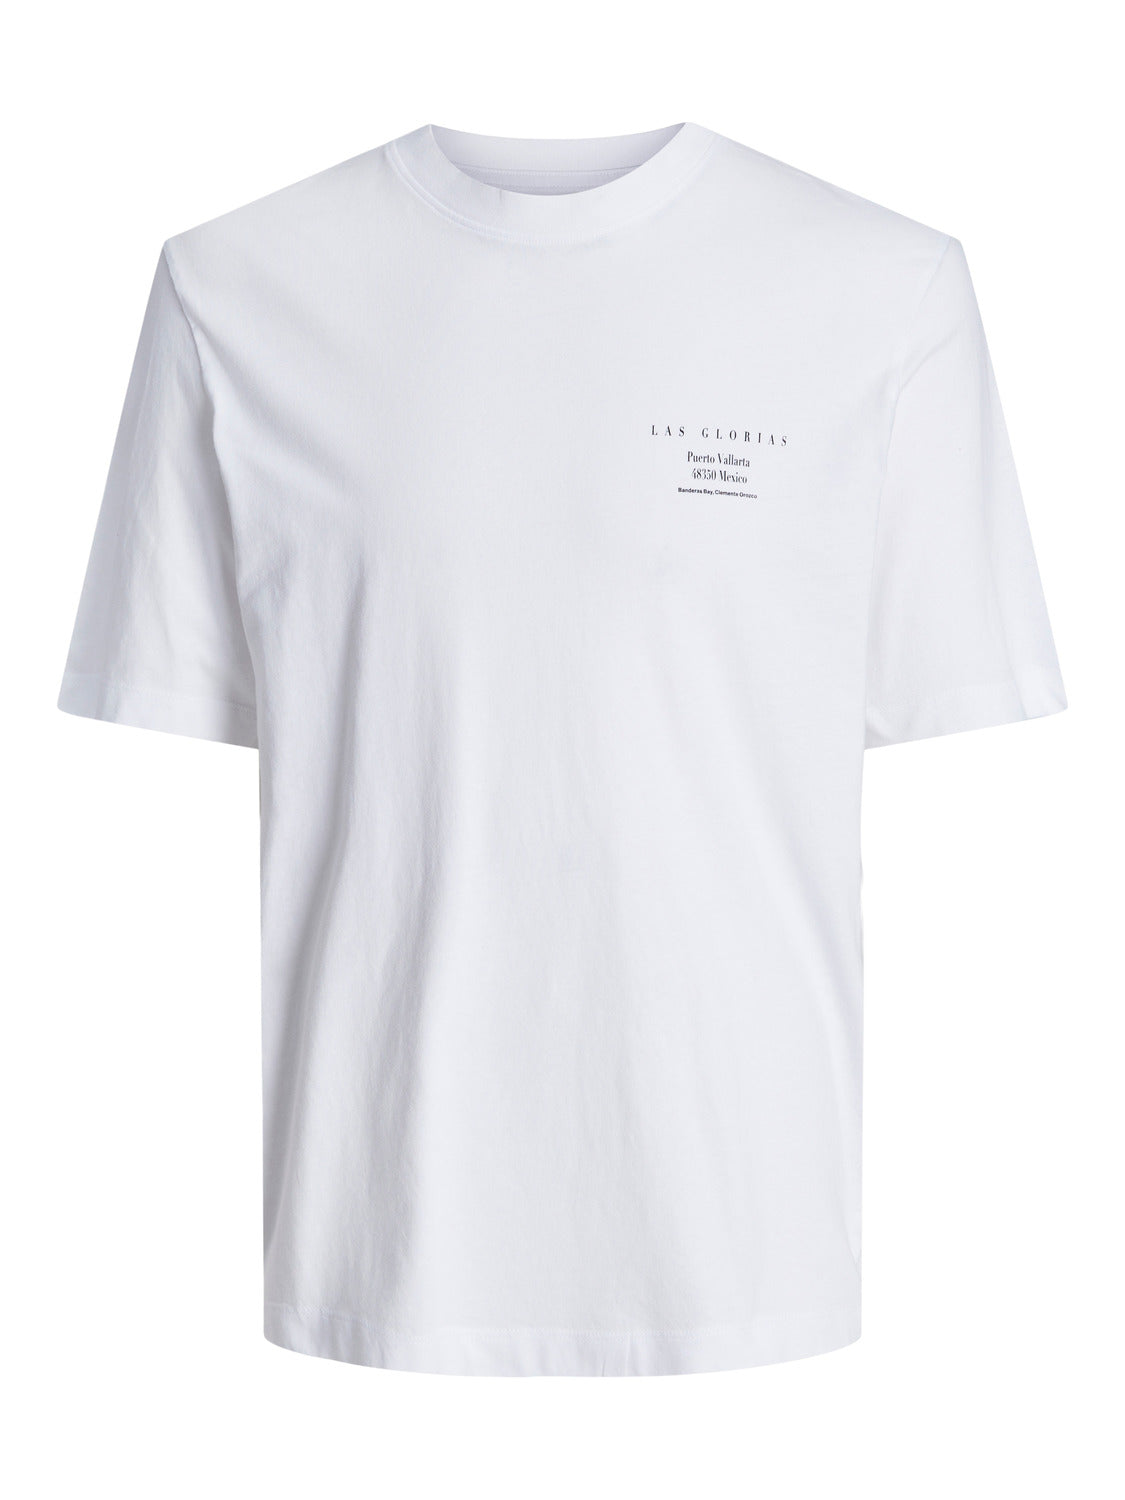 JORBELMONTBACK T-Shirt - Bright White